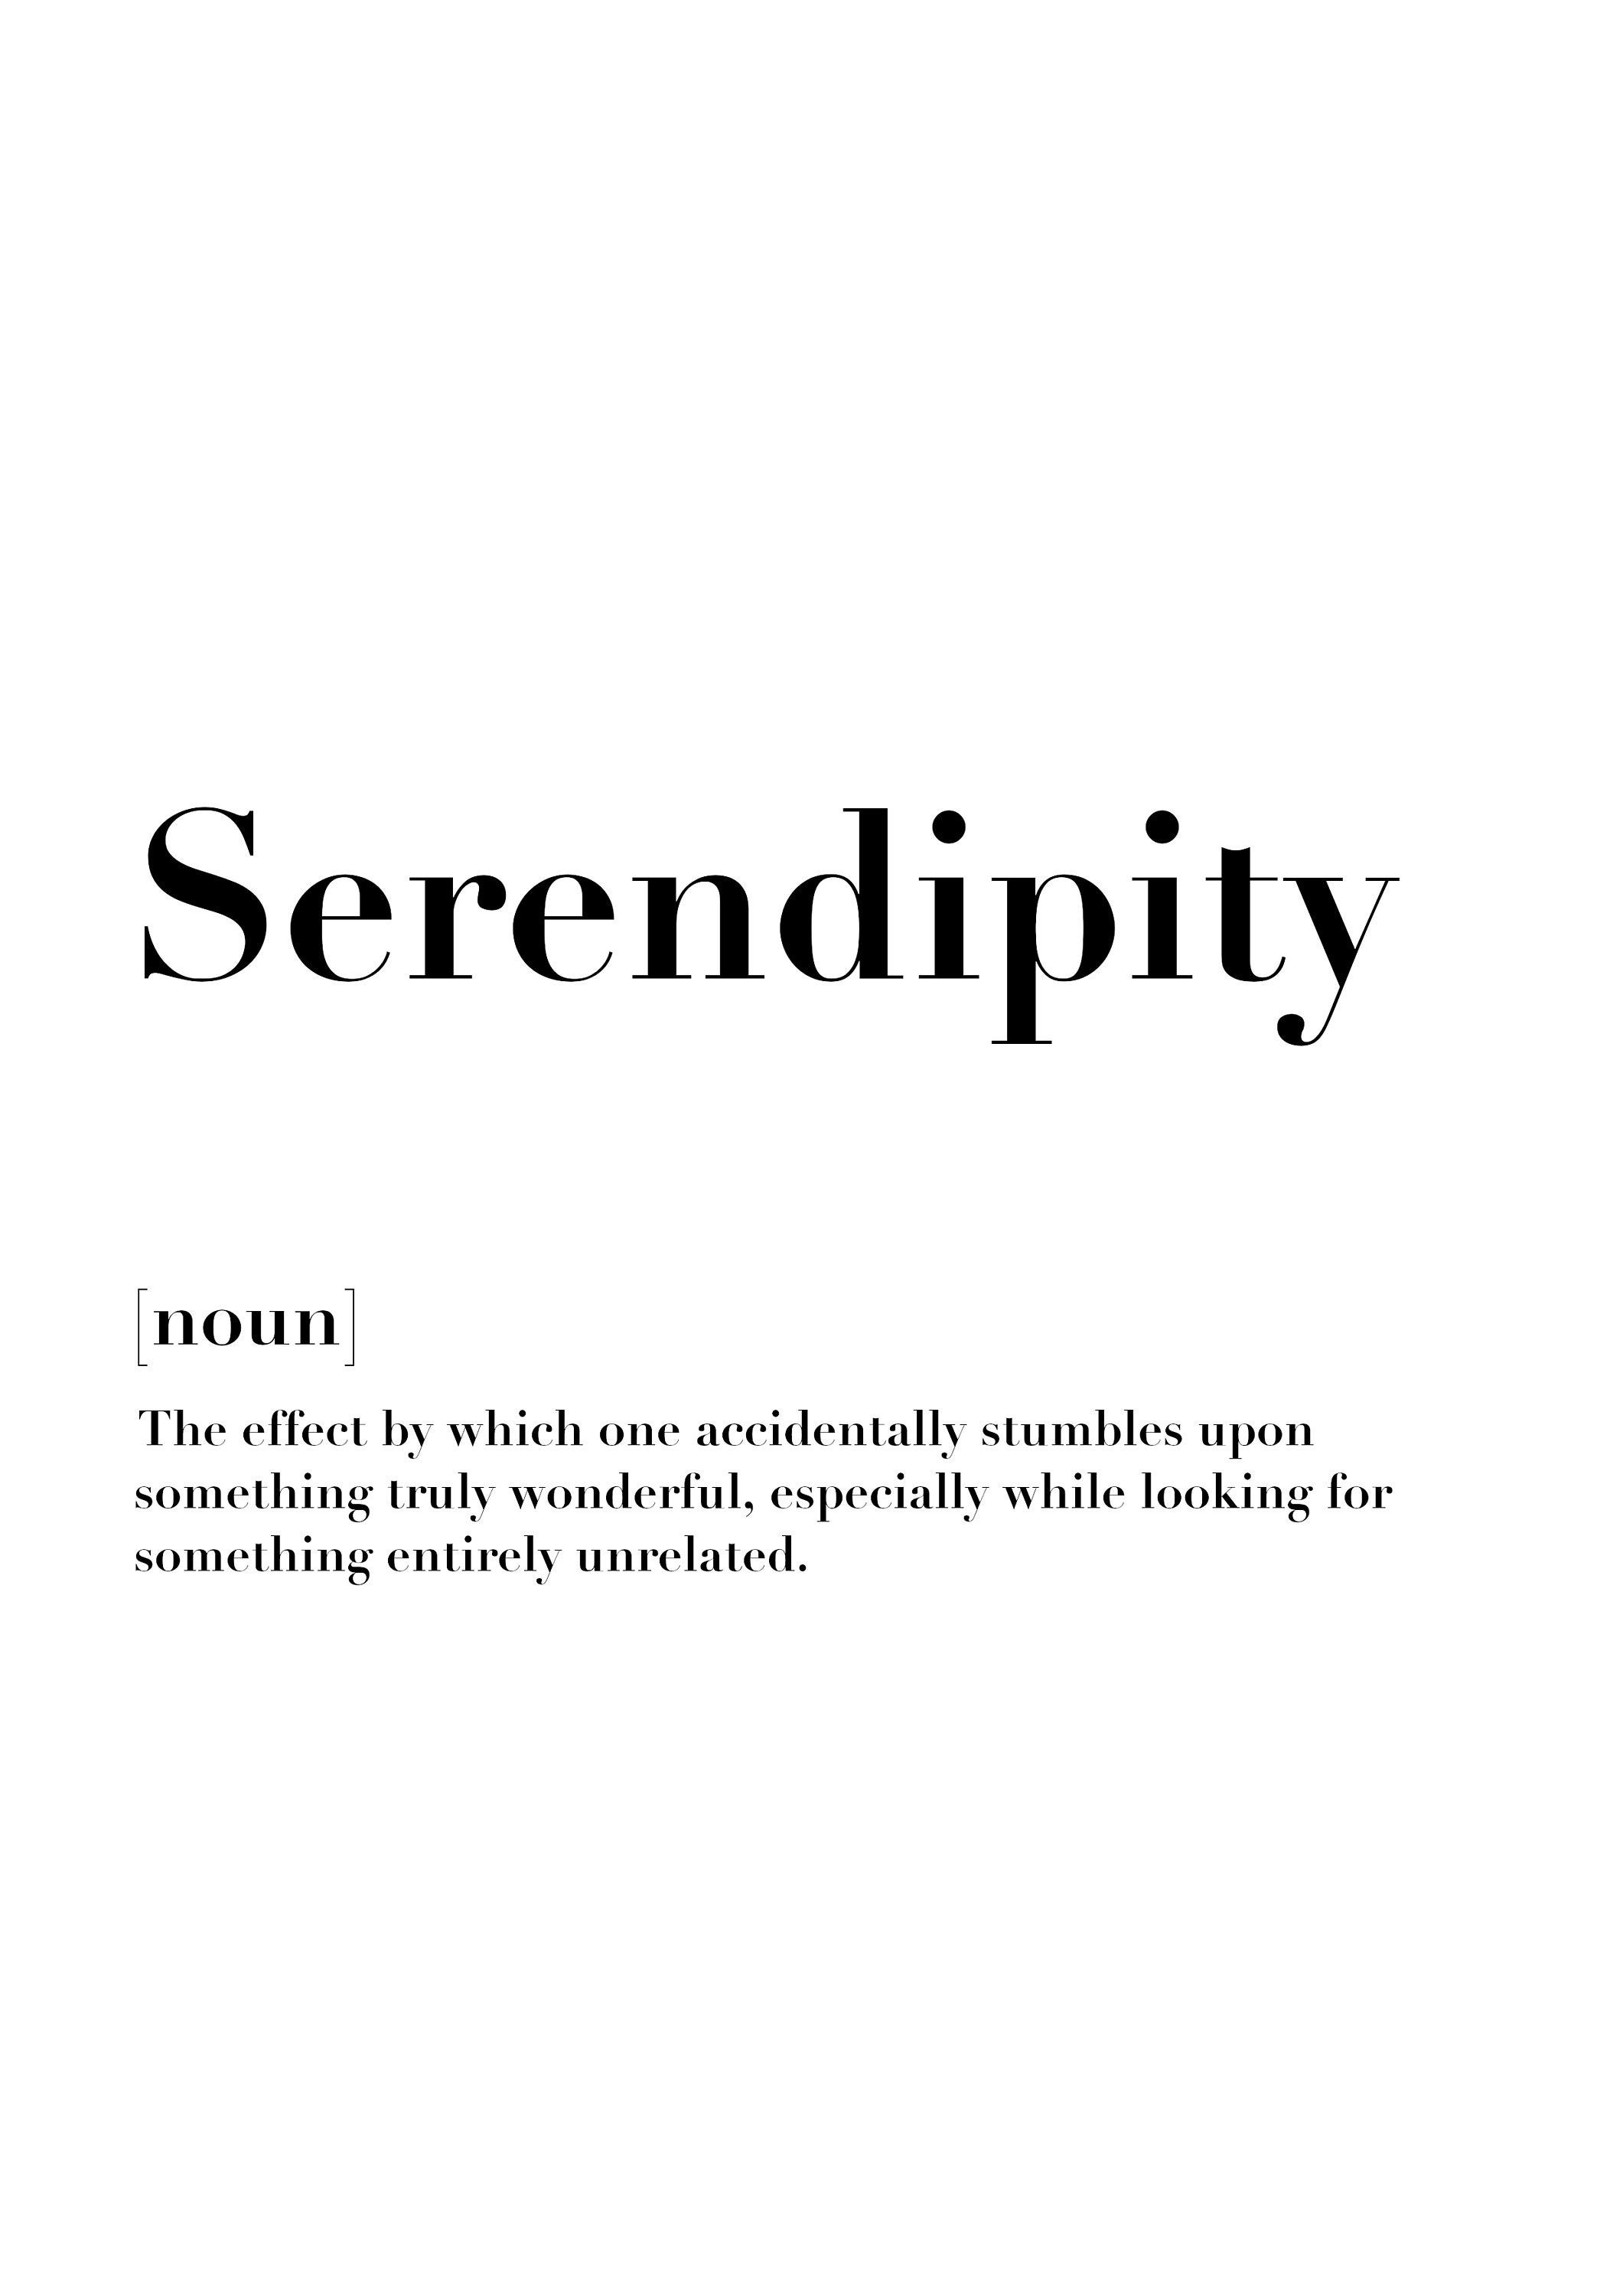 Serendipity Print Serendipity Definition Serendipity Etsy Uk 